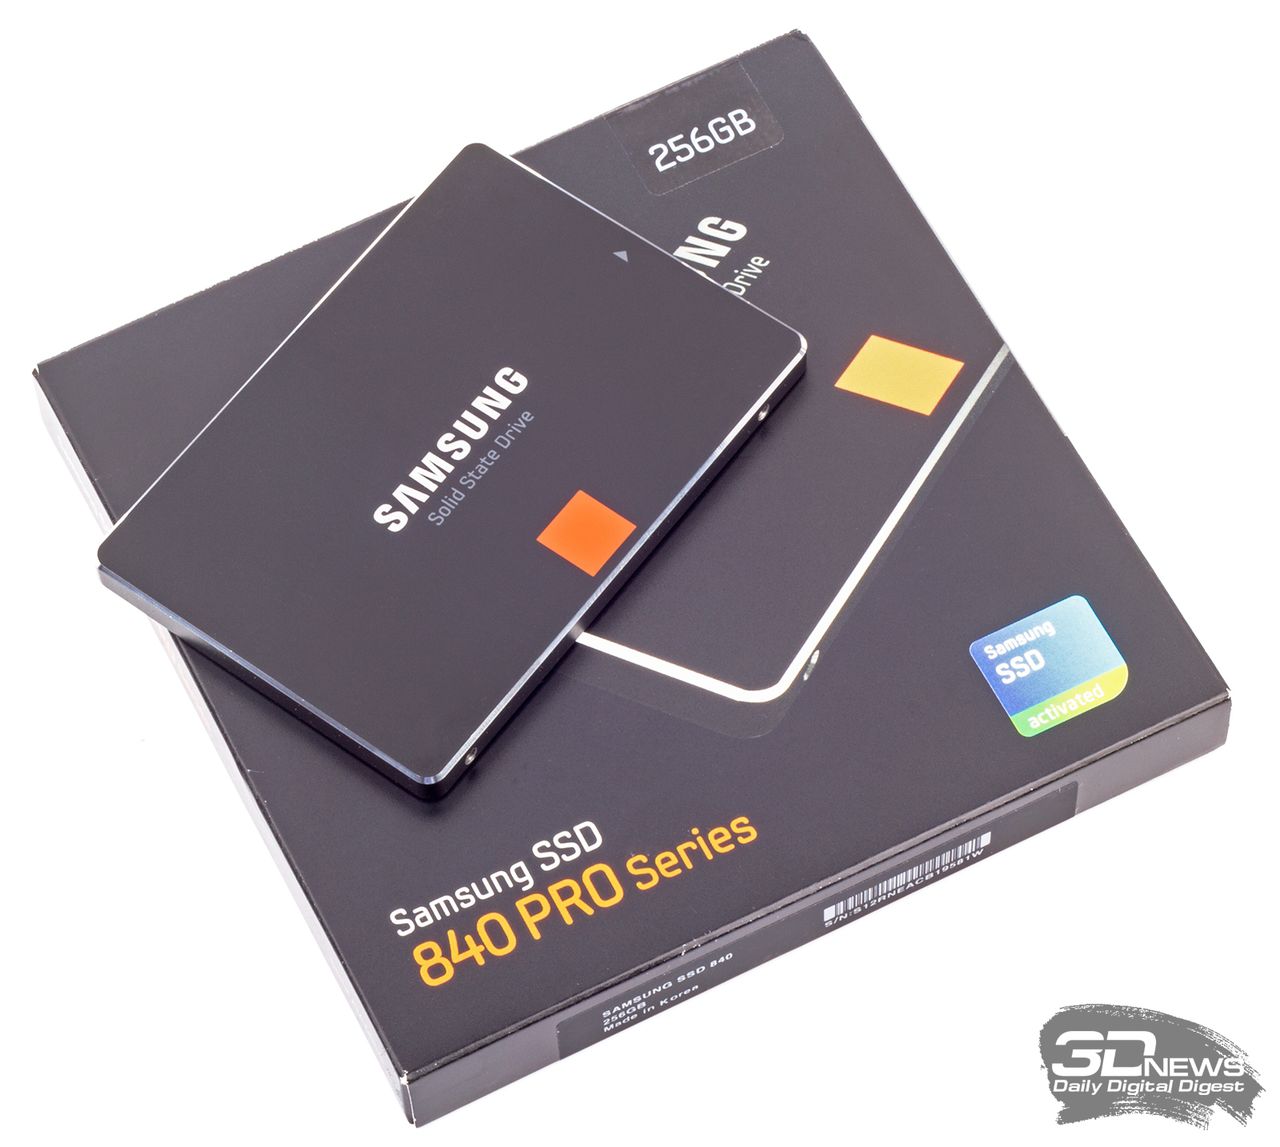 Samsung Ssd 840 Evo 500gb